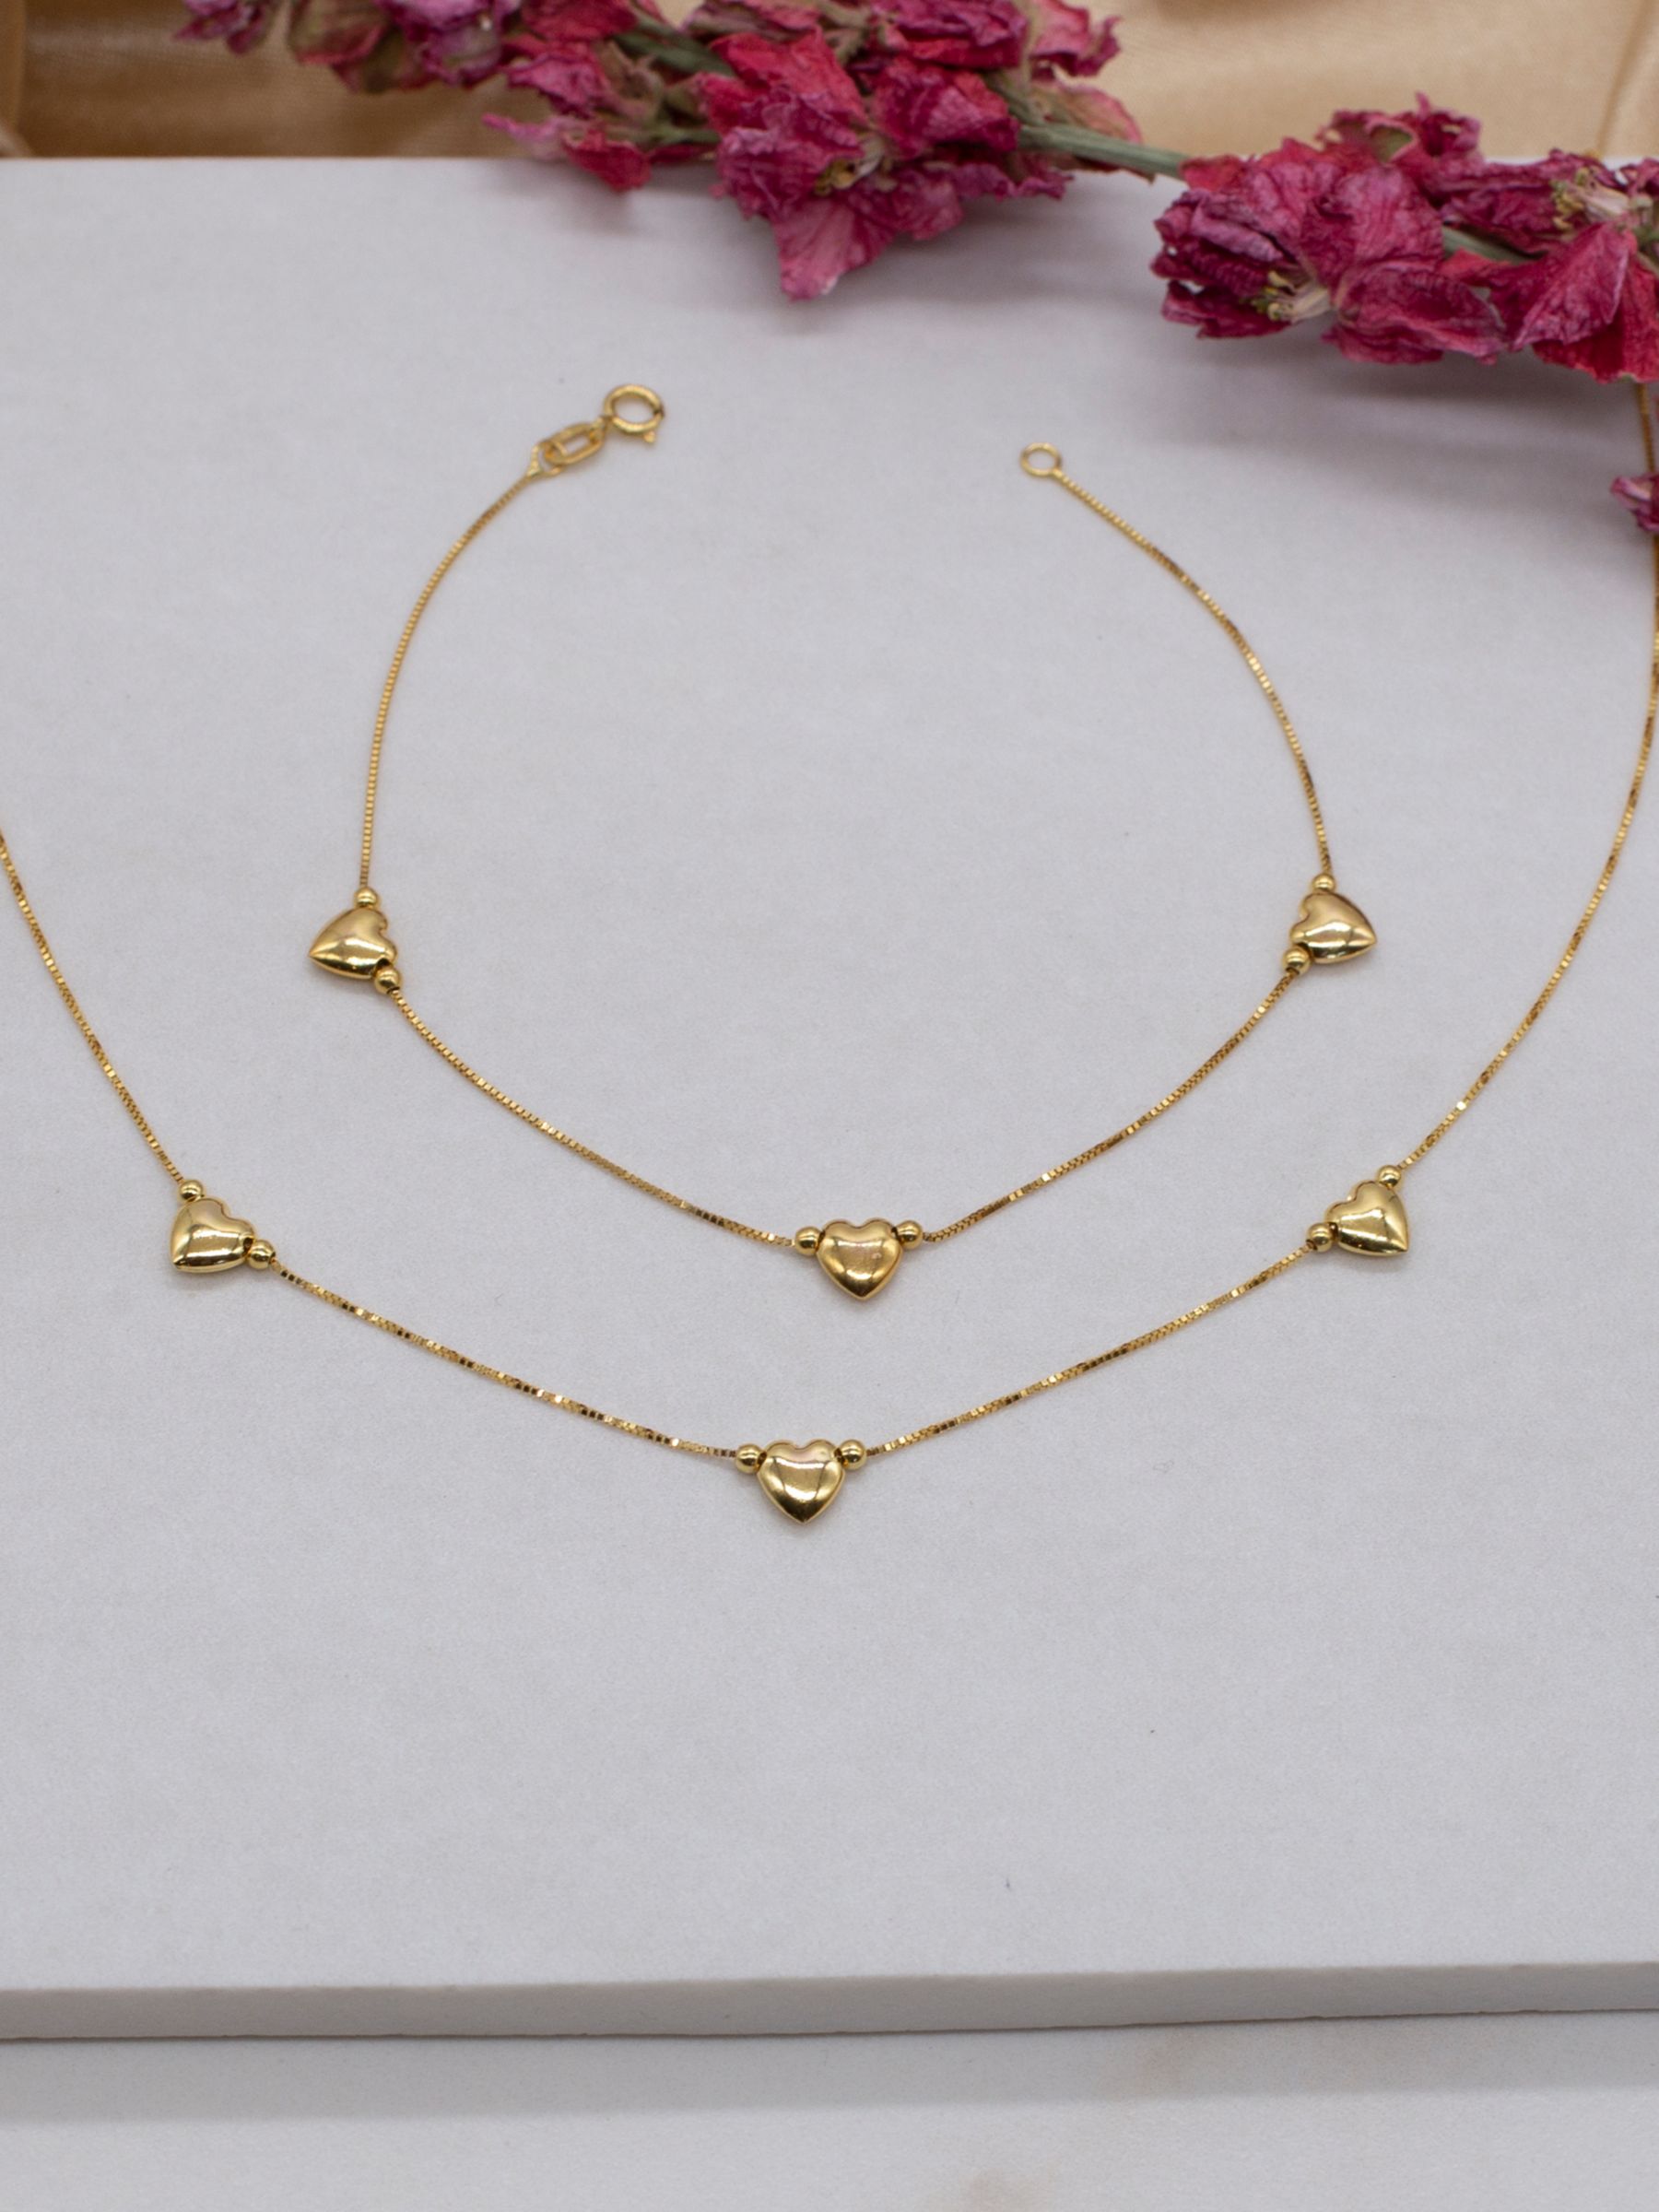 Jewelry Box Chain Fashion Jewelry Necklace Bracelet Anklet for